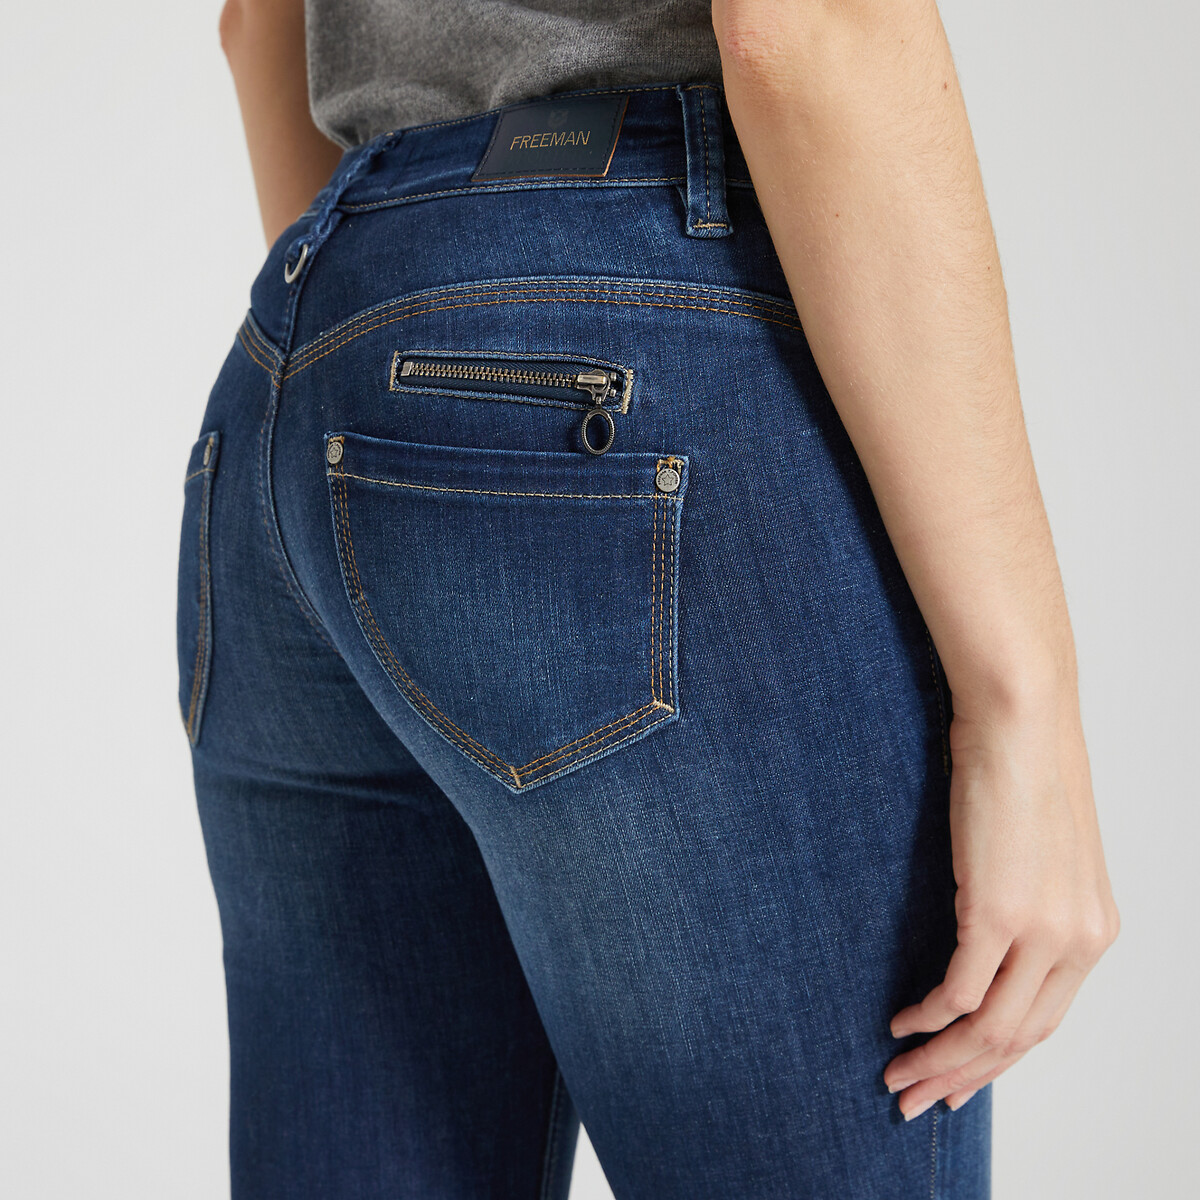 Alexa slim fit jeans, length 32.5